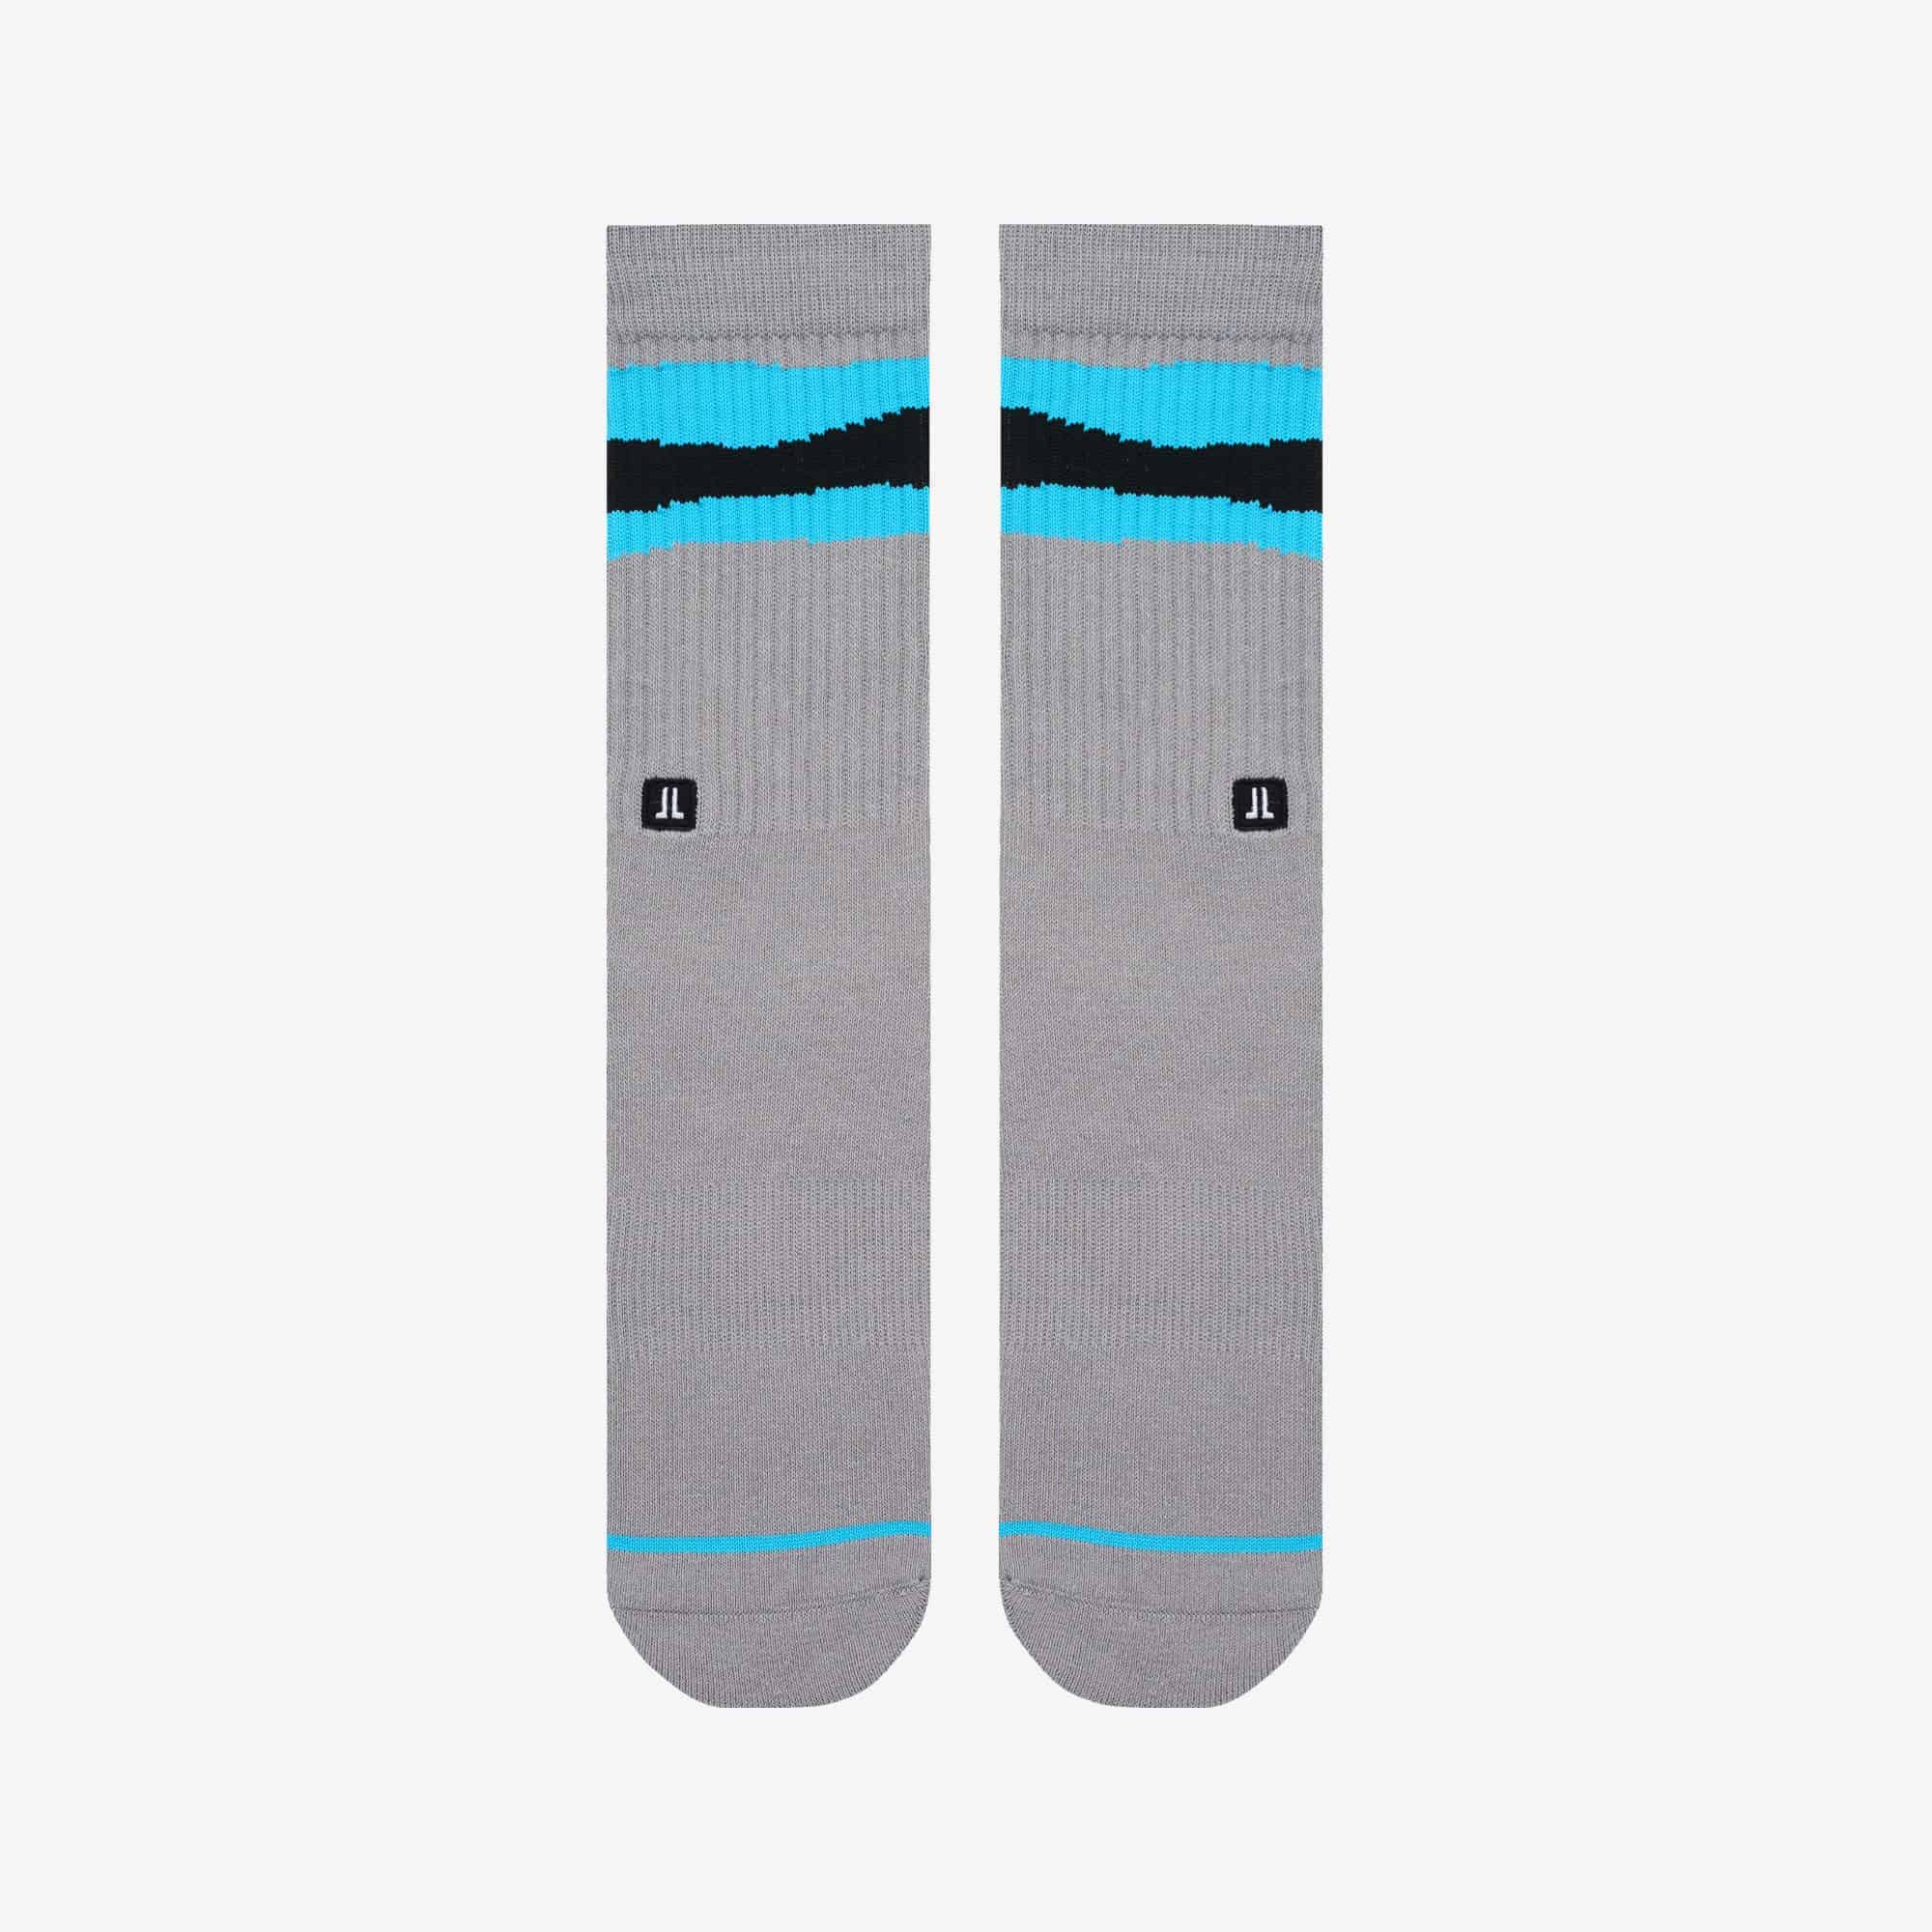 Asymmetry in Blue | Limited Edition Art on Socks